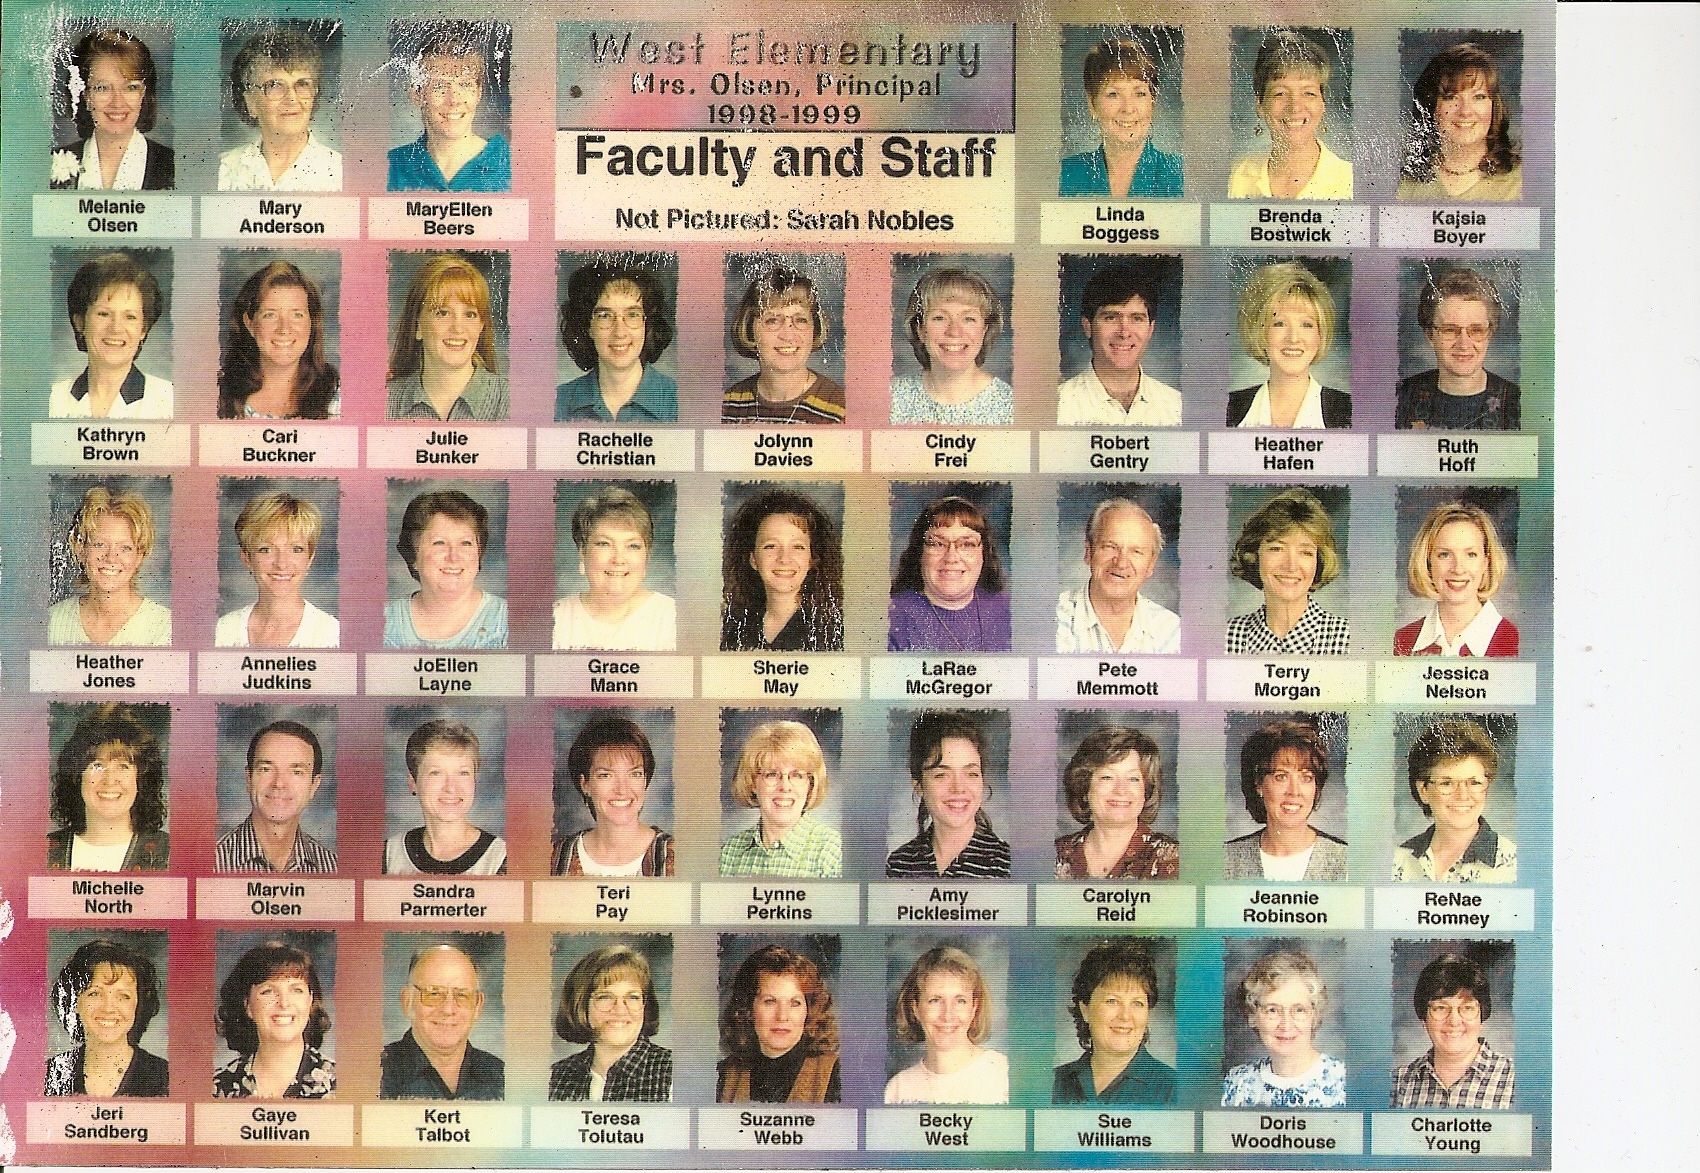 WCHS-00254 West Elementary School 1998-1999 Faculty